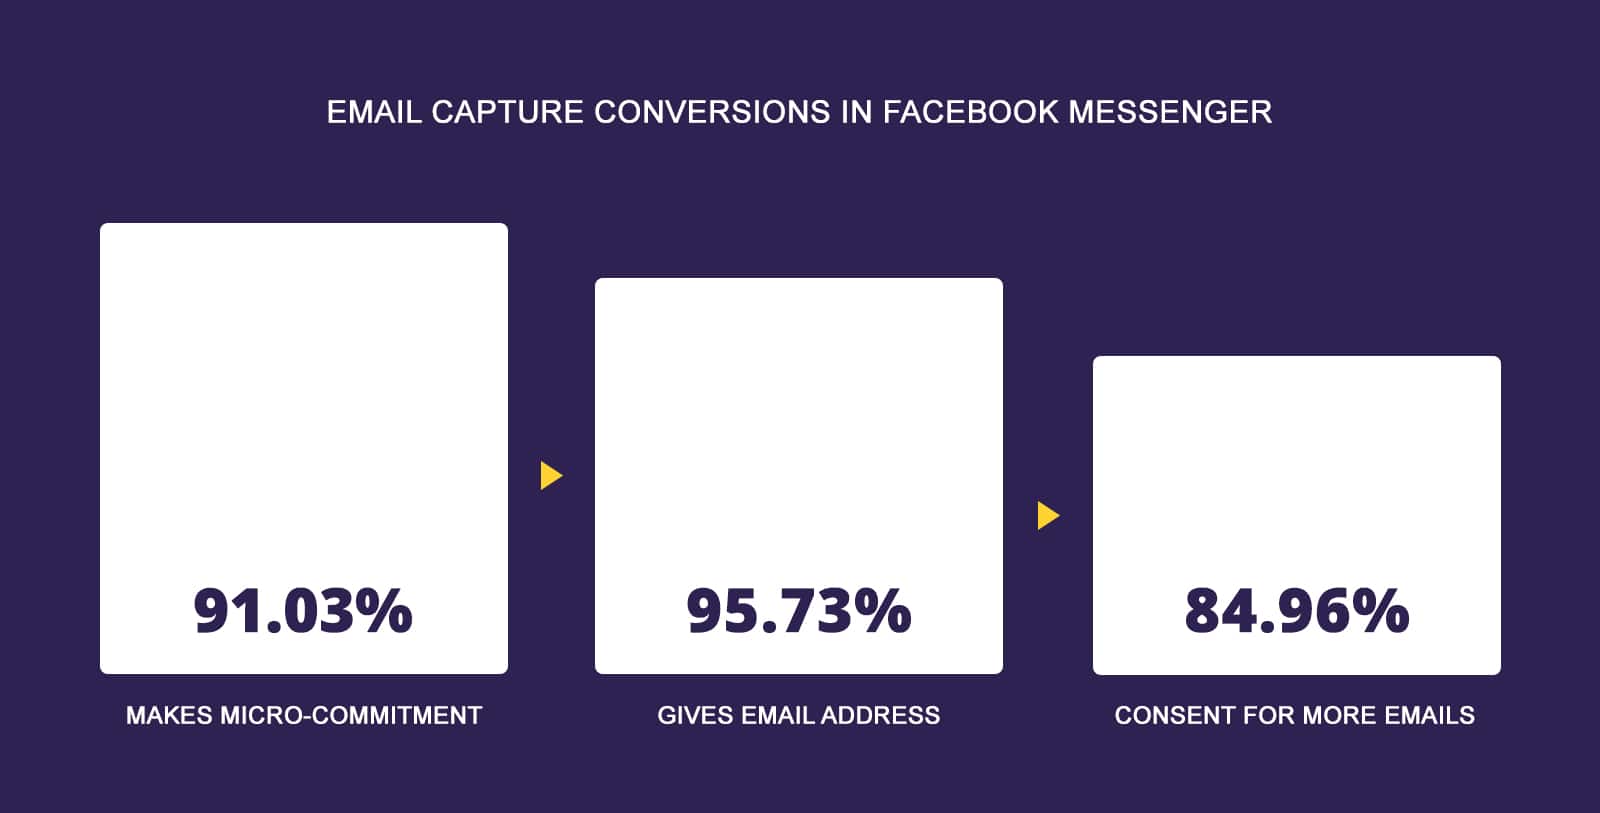 Email capture conversion in Facebook Messenger